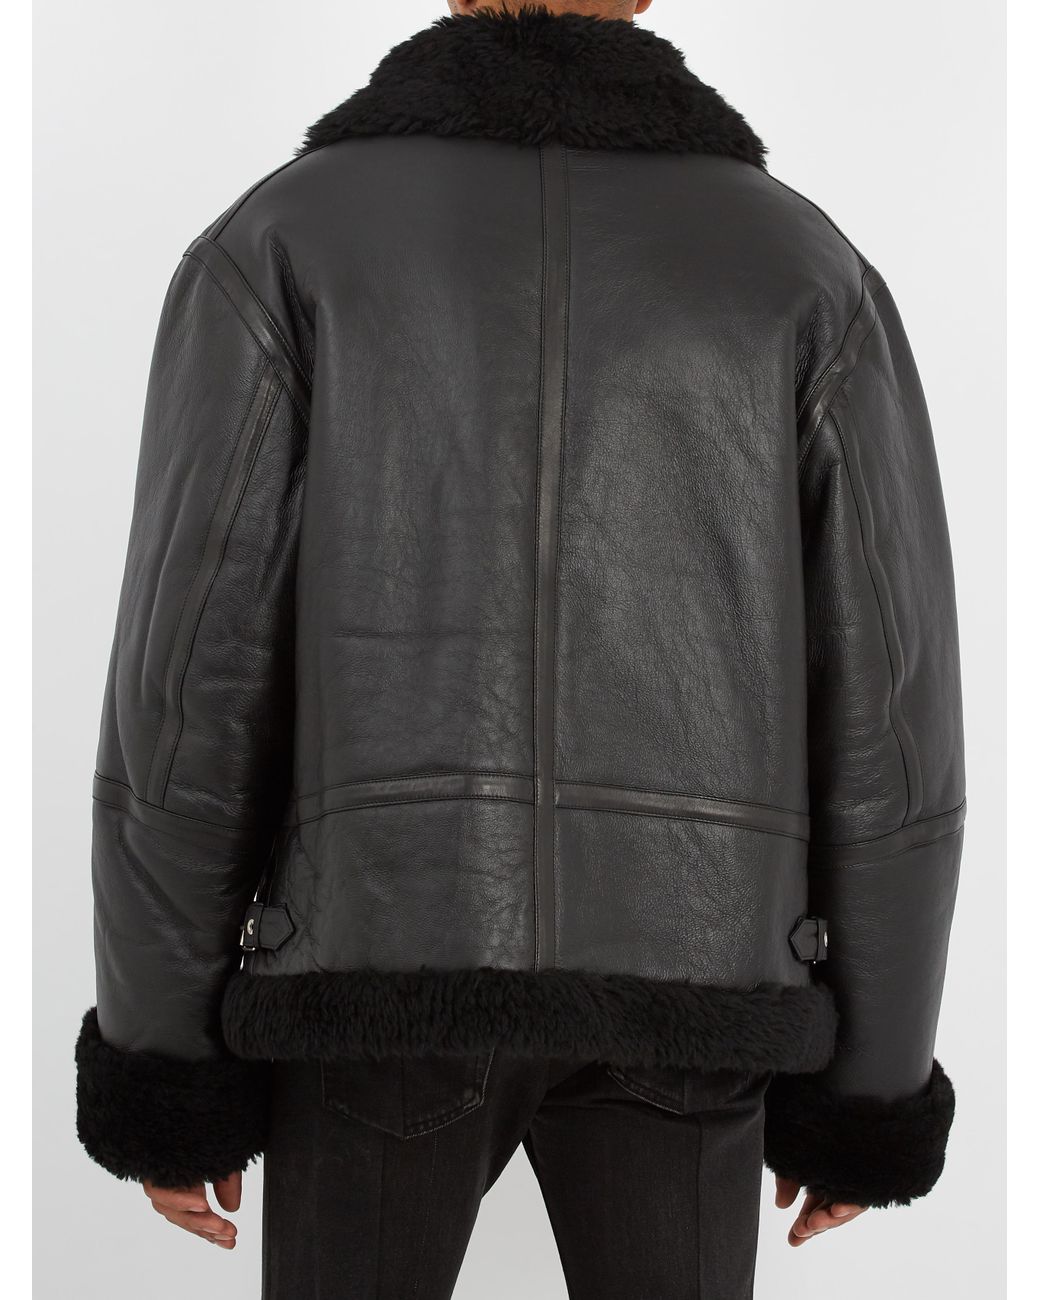 Vetements Oversized Shearling Jacket in Black for Men | Lyst